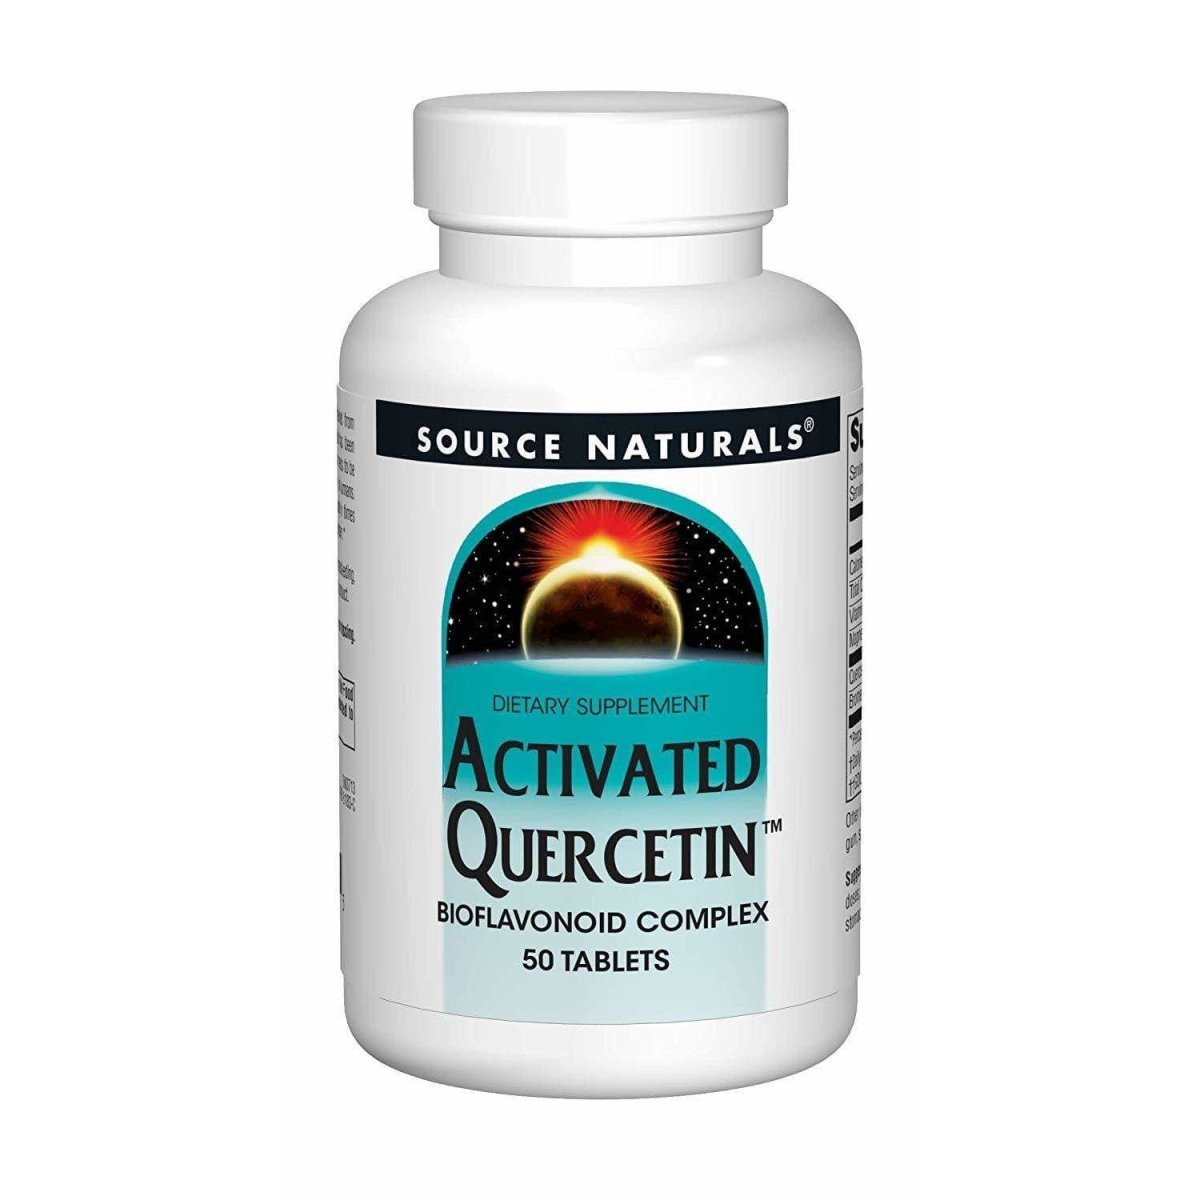 Source Naturals Activated Quercetin, 50 Tablets